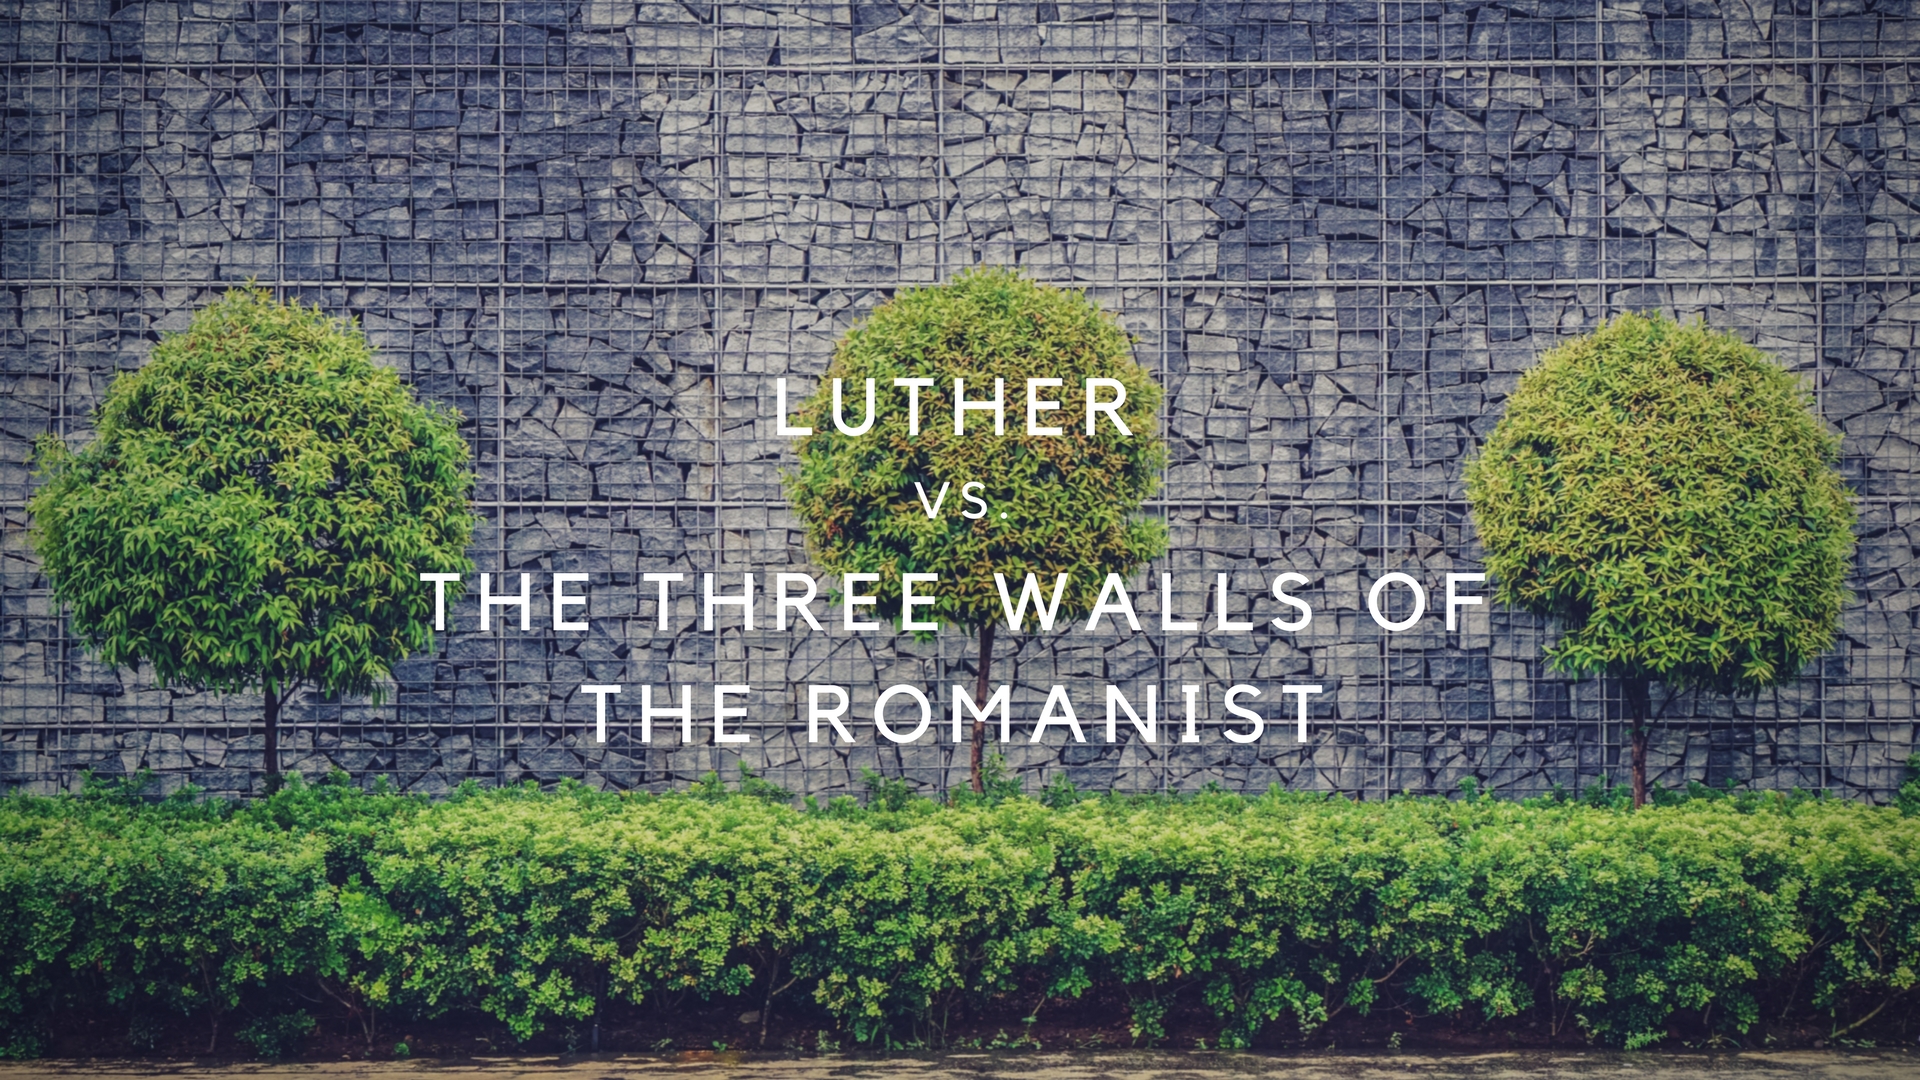 walls of romanist